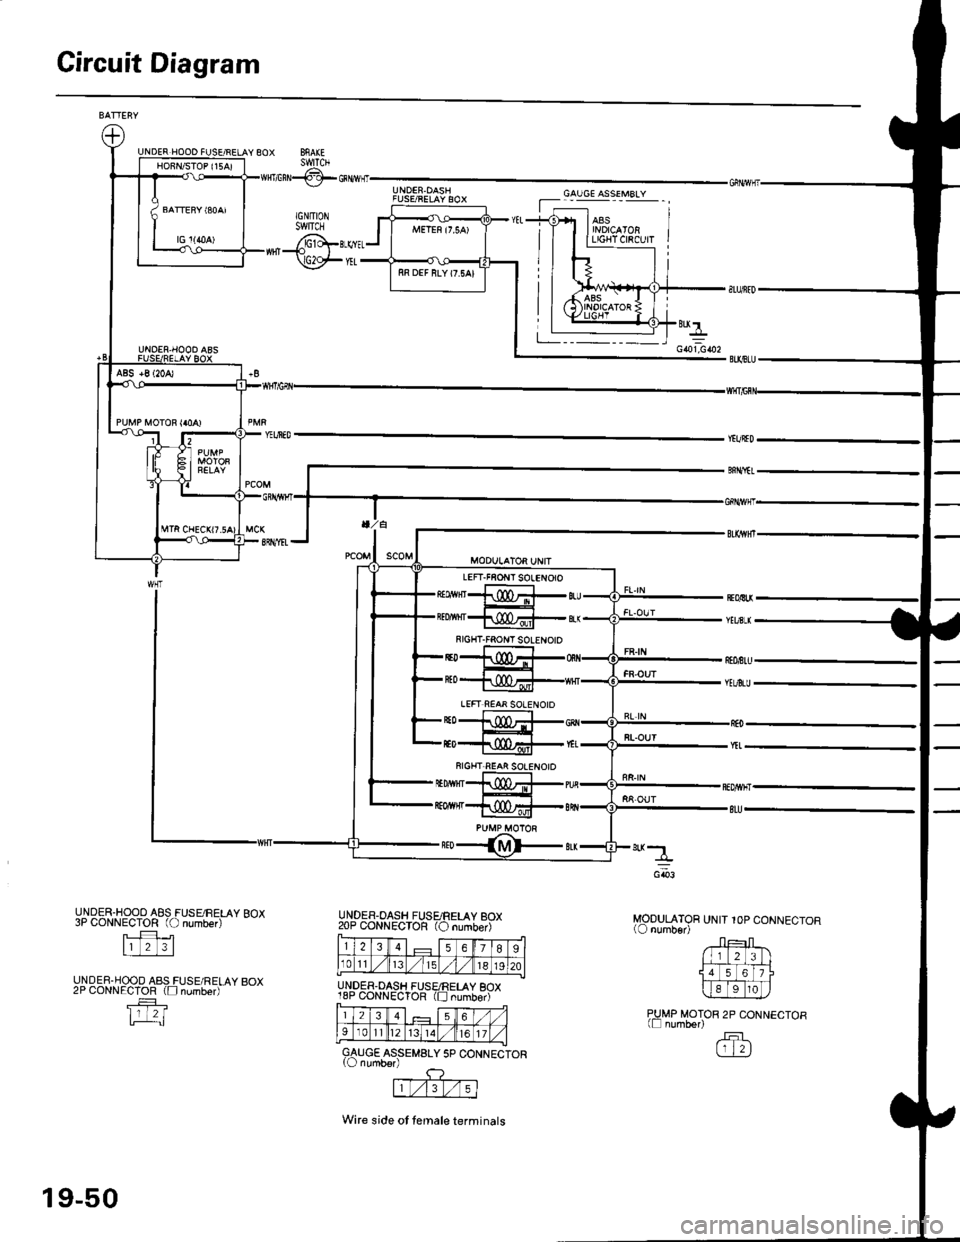 HONDA CIVIC 1997 6.G Workshop Manual Gircuit Diagram
MOOULATOR UNIT IOP CONNECTOR
zrJrF!_lll 2 3ll
14TiEltl
c@4
PIMP MOTOR 2P CONNECTOR(Ll number)fFlGTN
UNDER.HOOO A8S FUSE,/FELAY BOX3P CONNECTOR (O number)
| 2 3l
UNDER.HOOD AAS FUSE/REL